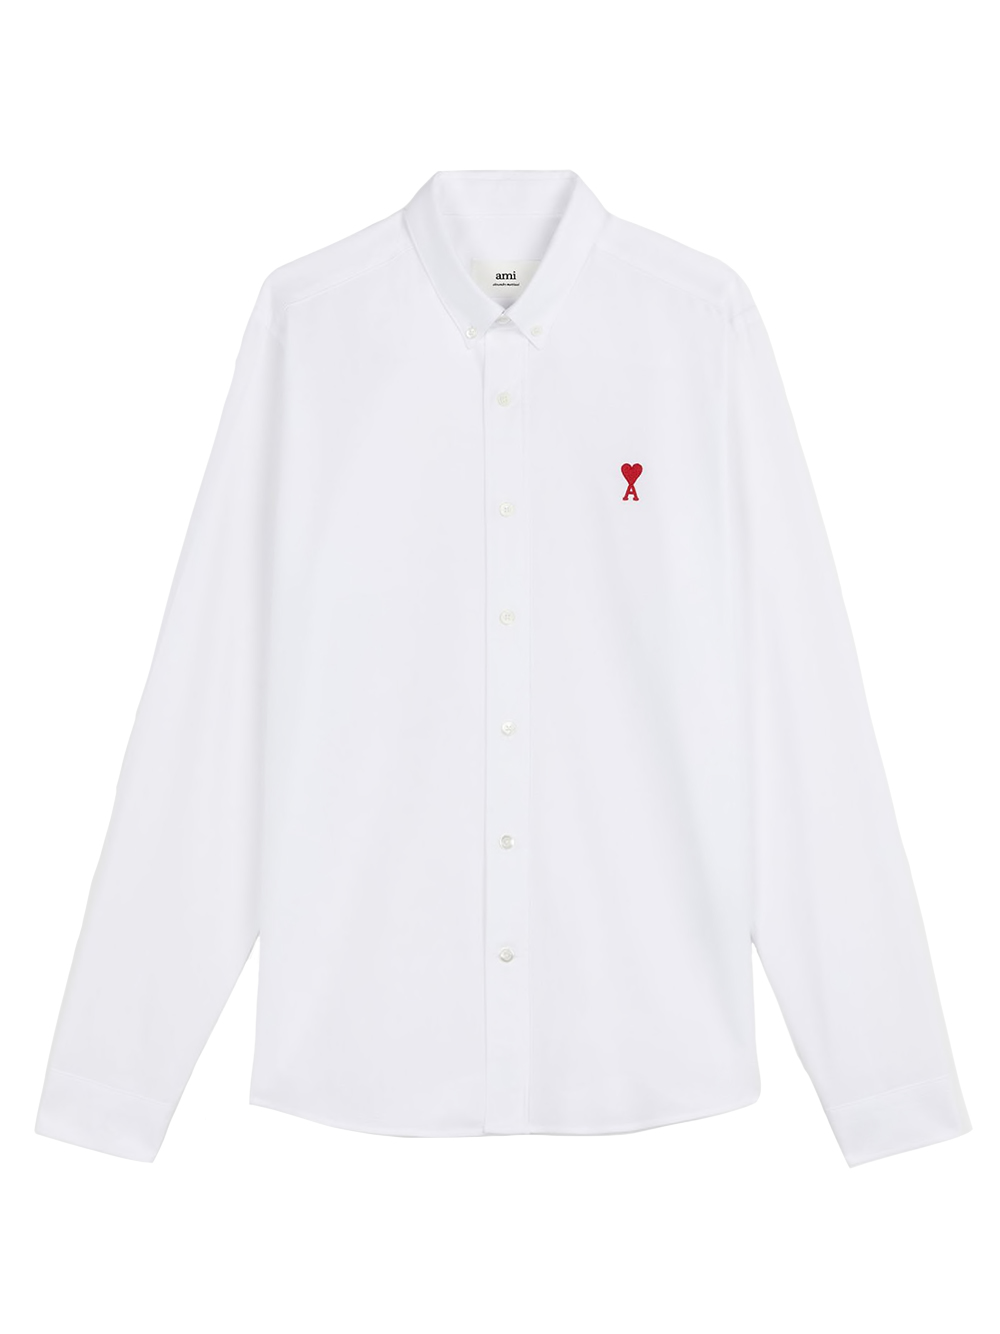 Ami Paris Button Down Ami De Coeur Oxford Shirt White/Red Men's - US